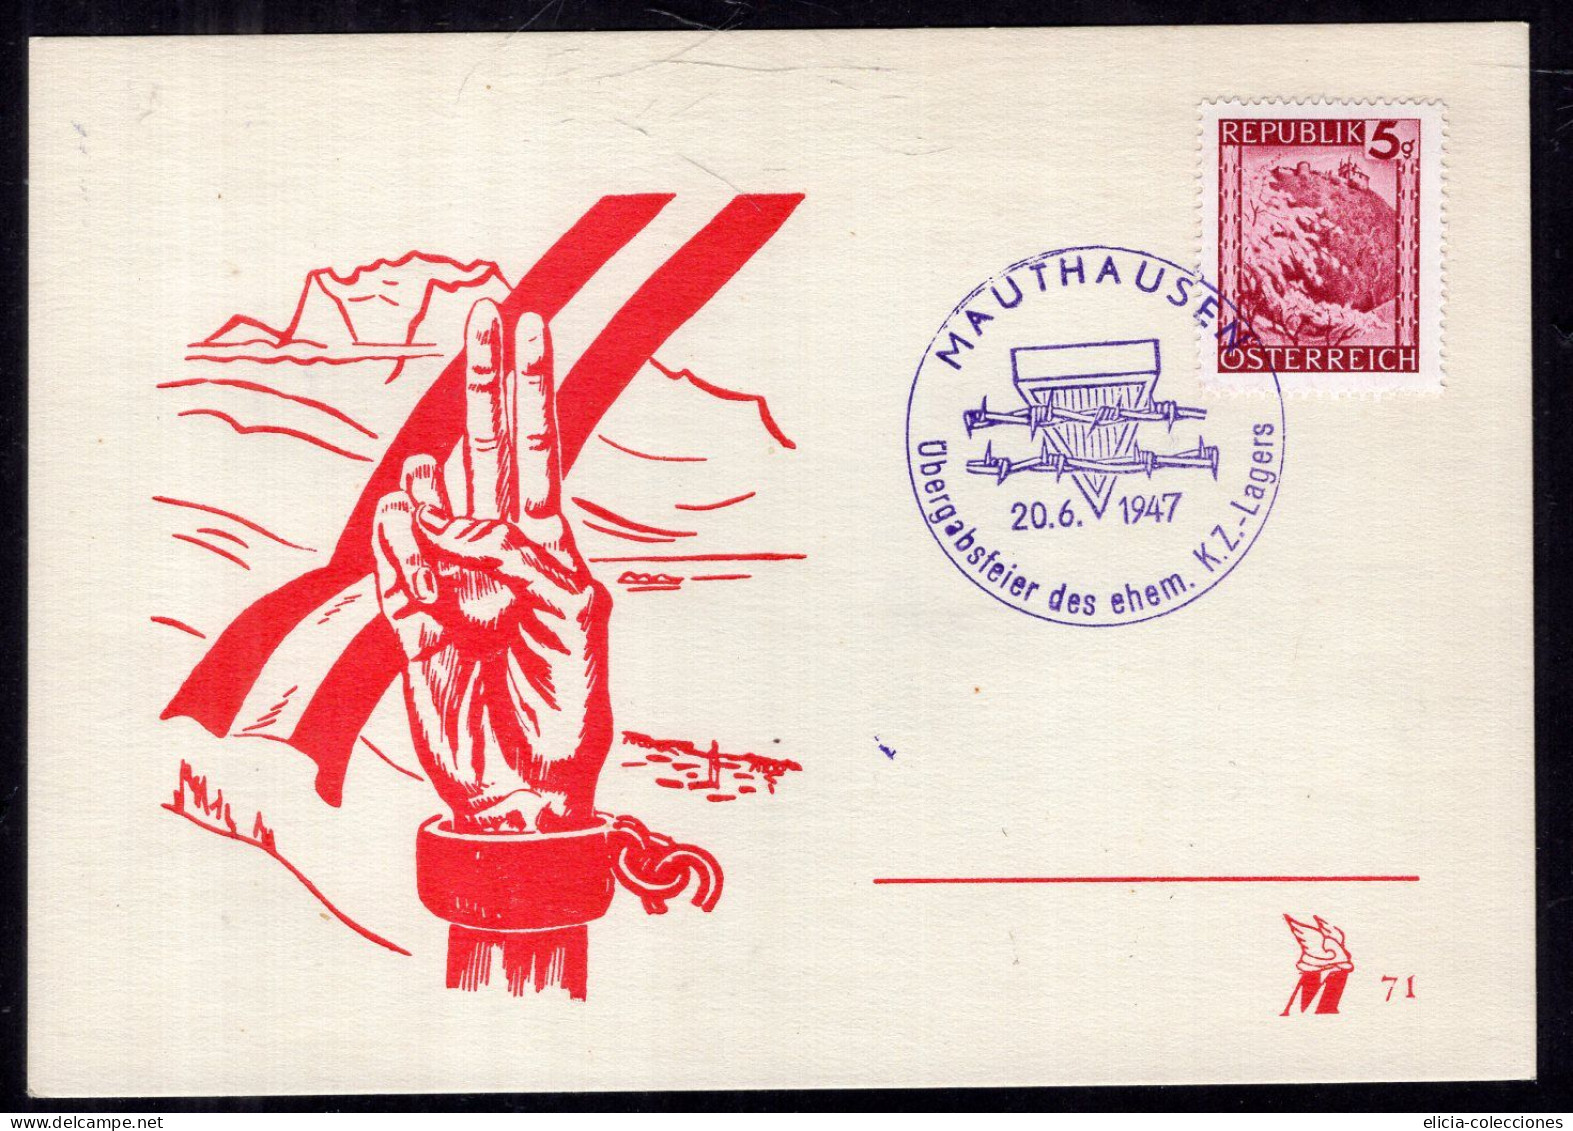 Österreich - 1947 - Postcard - Special Postmark - Mauthausen Concentration Camp - Schärding